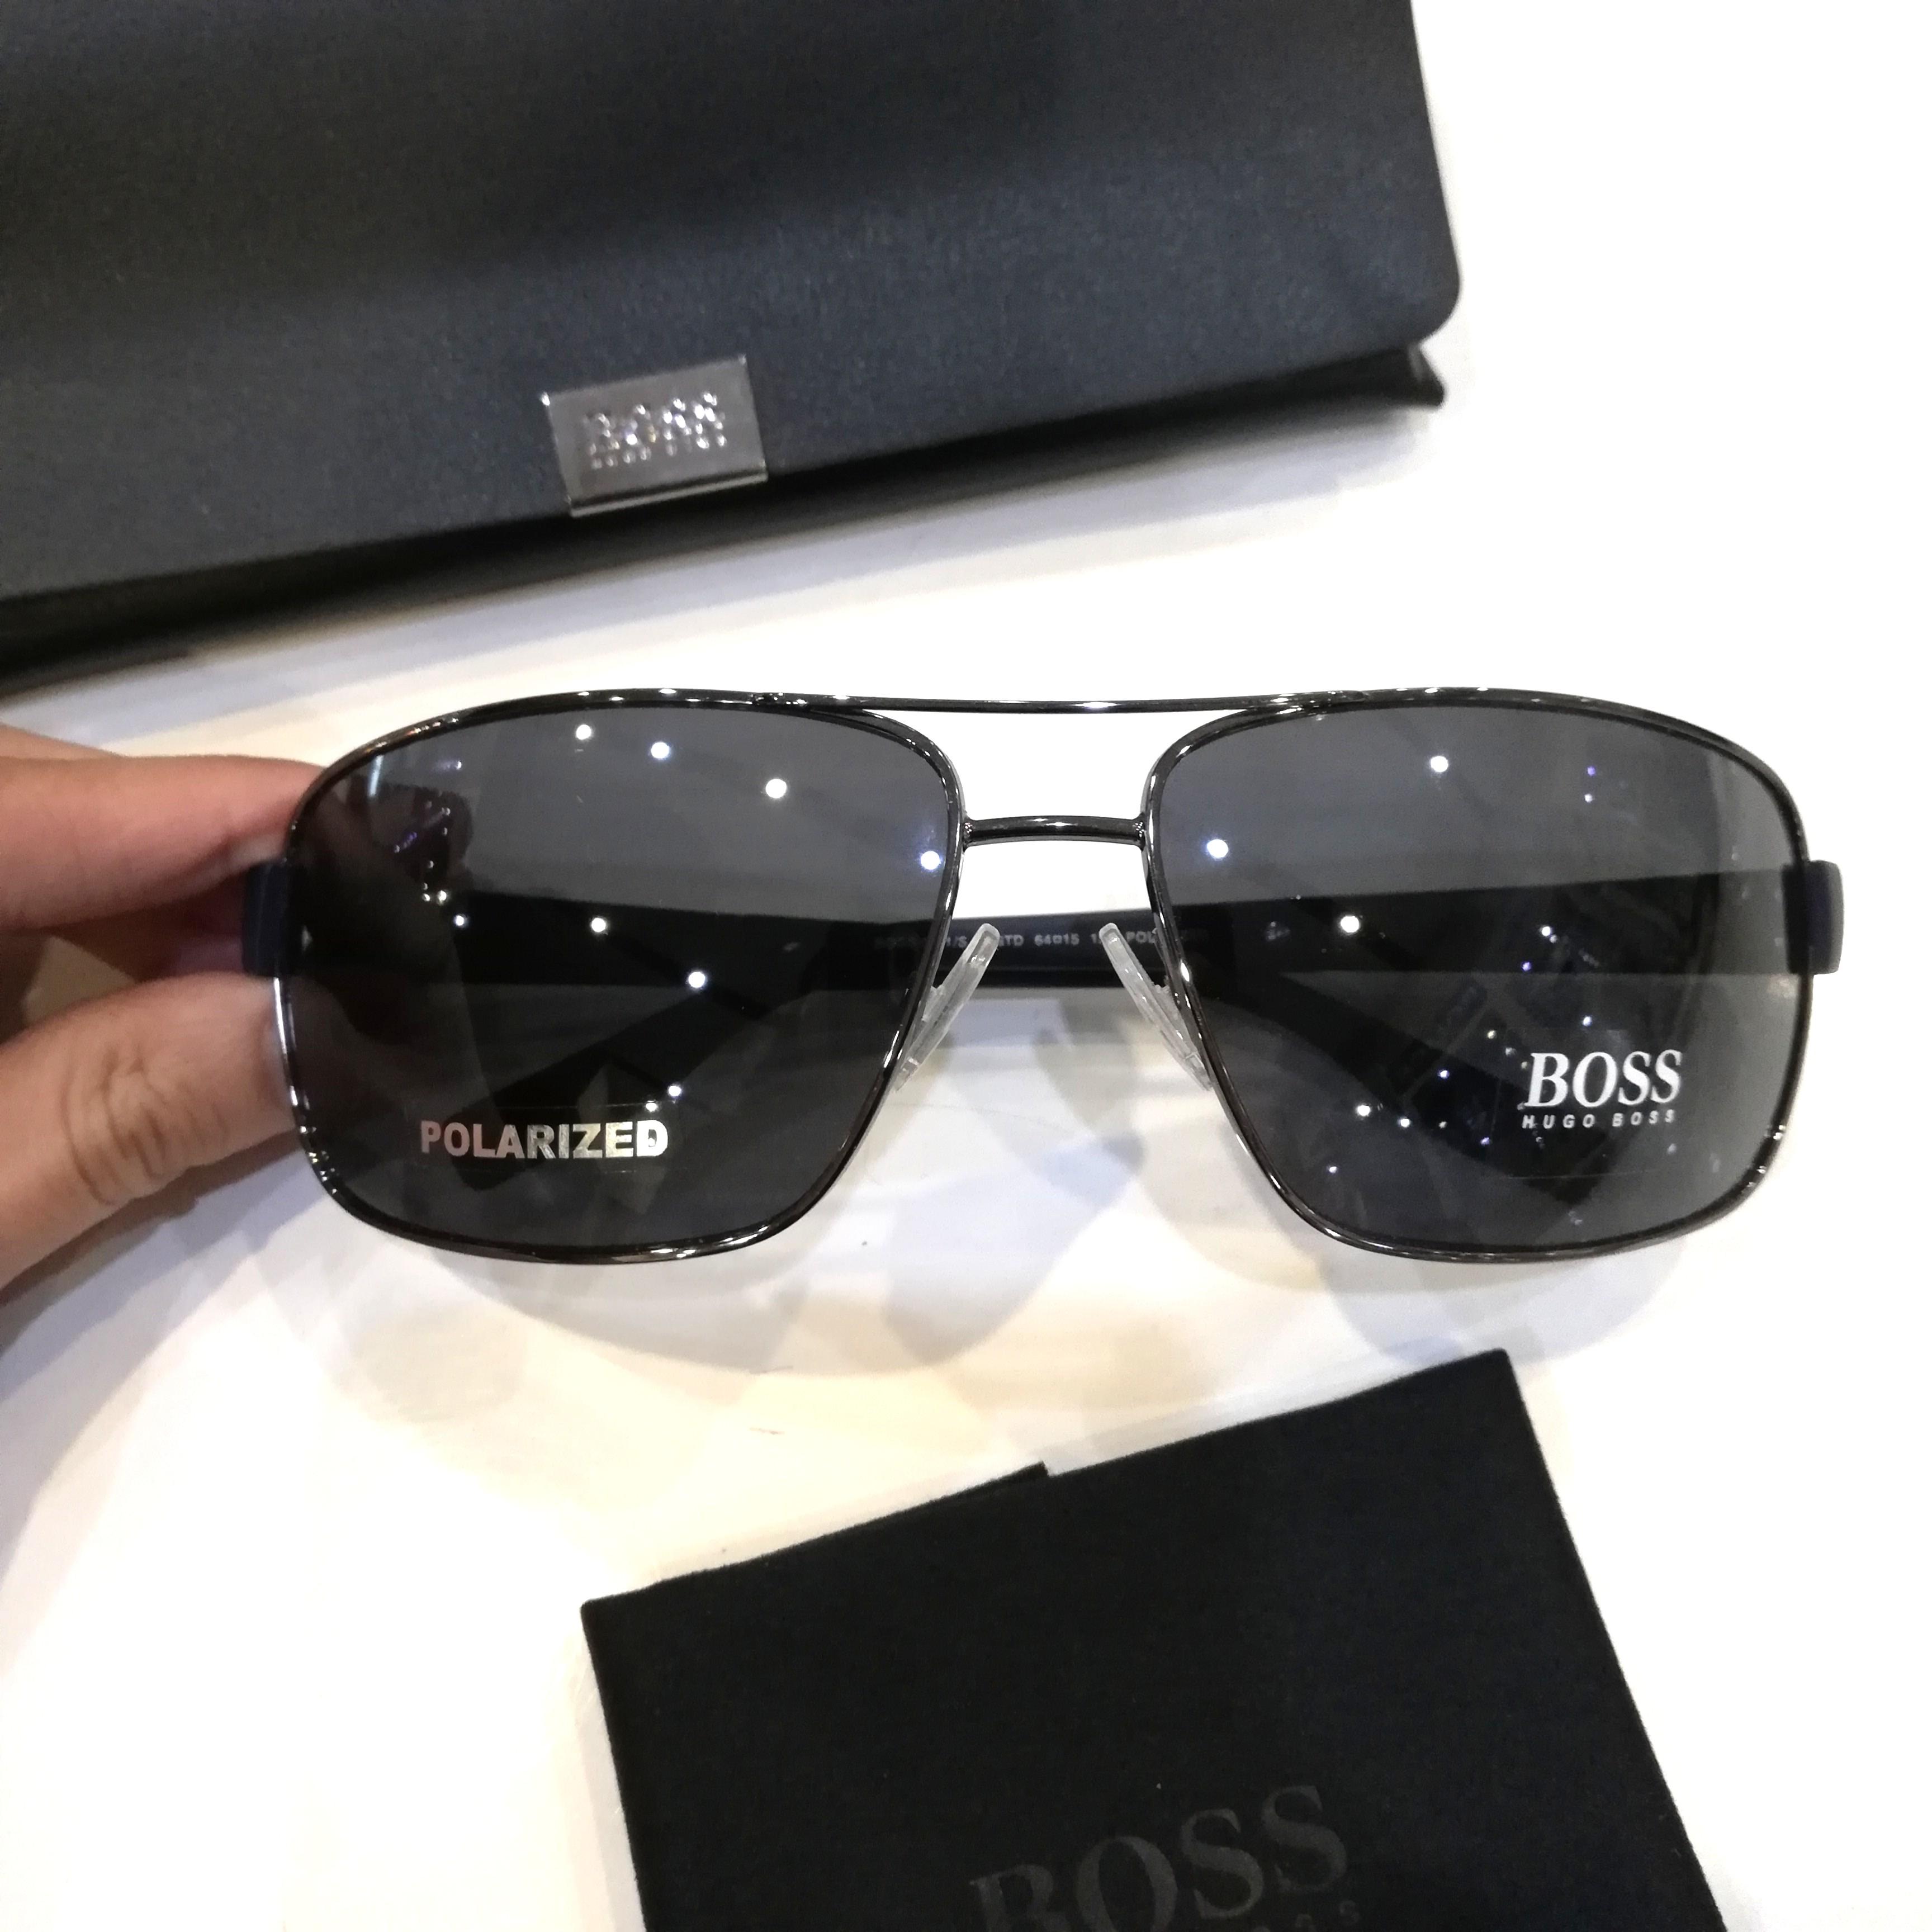 hugo boss sunglasses 2019